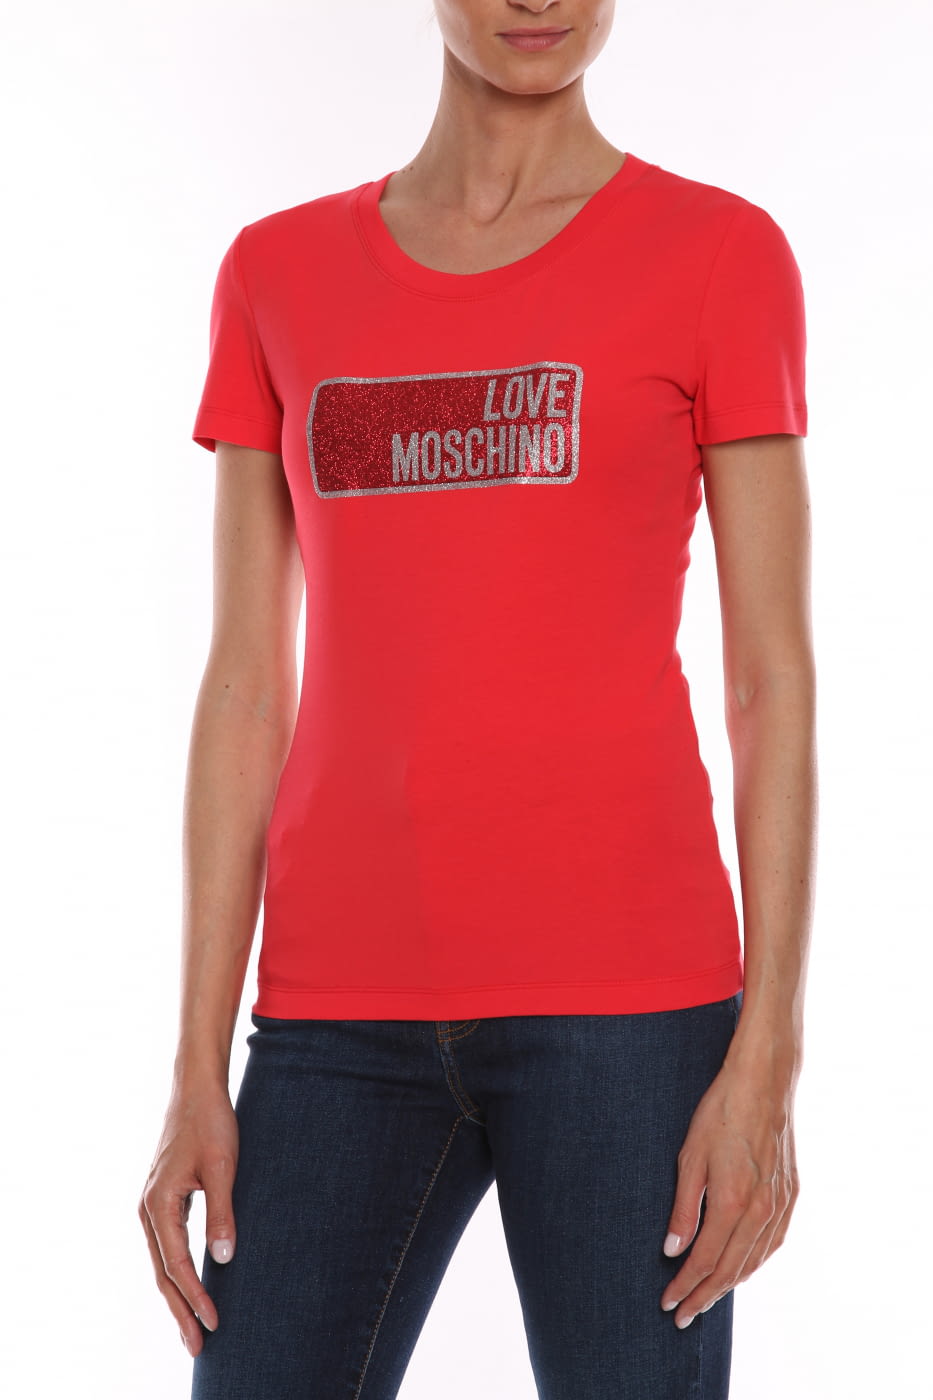 LOVE MOSCHINO camiseta roja manga corta  con logo de lúrex